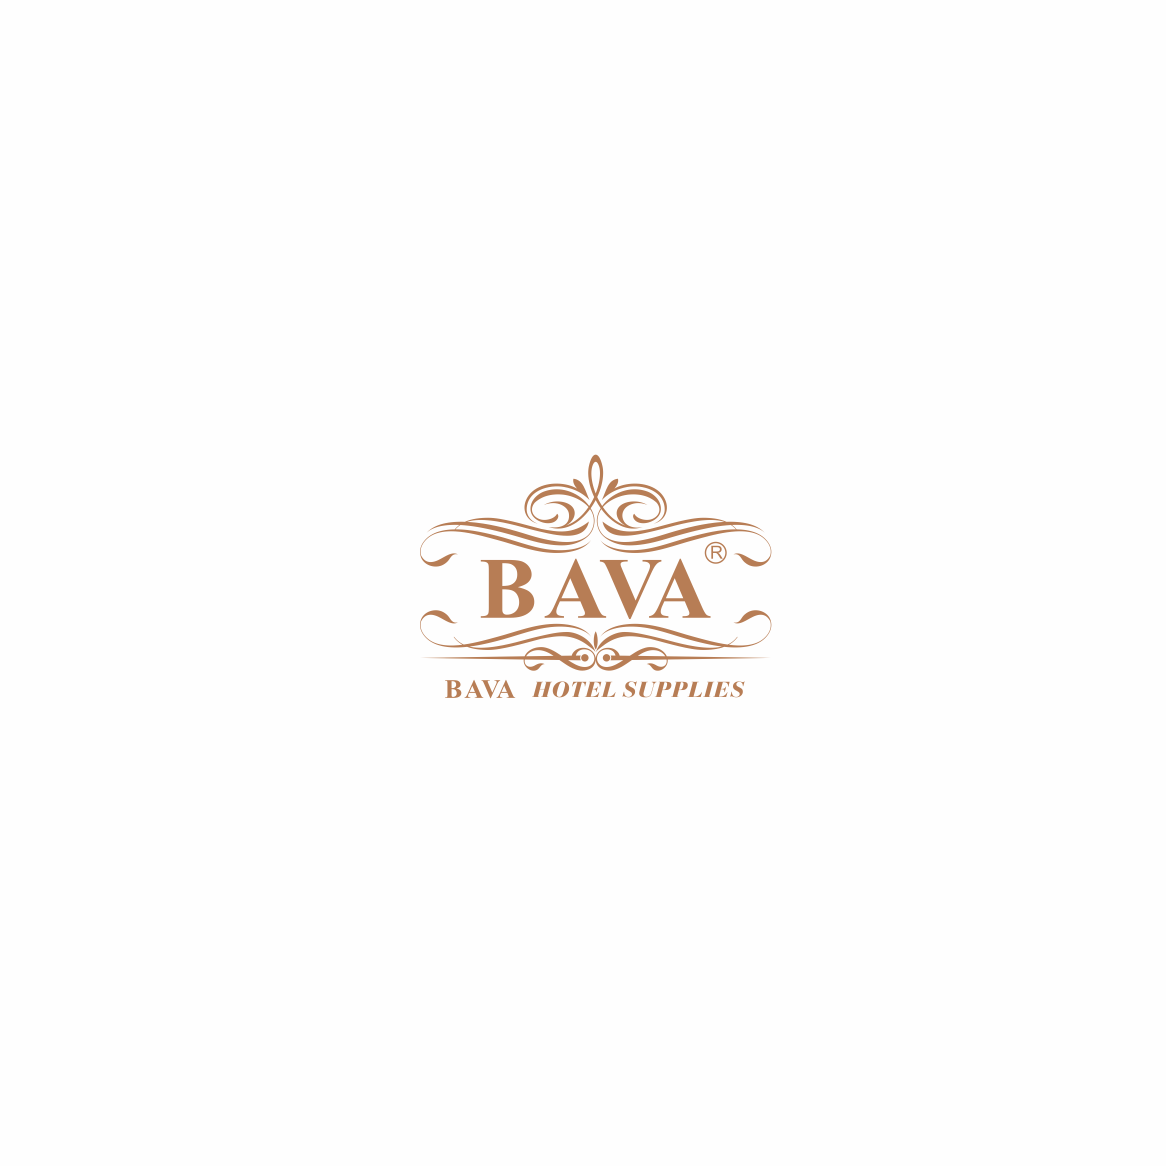 SHAOXING BAVA HOTEL SUPPLIES MANUFACTURE CO., LTD